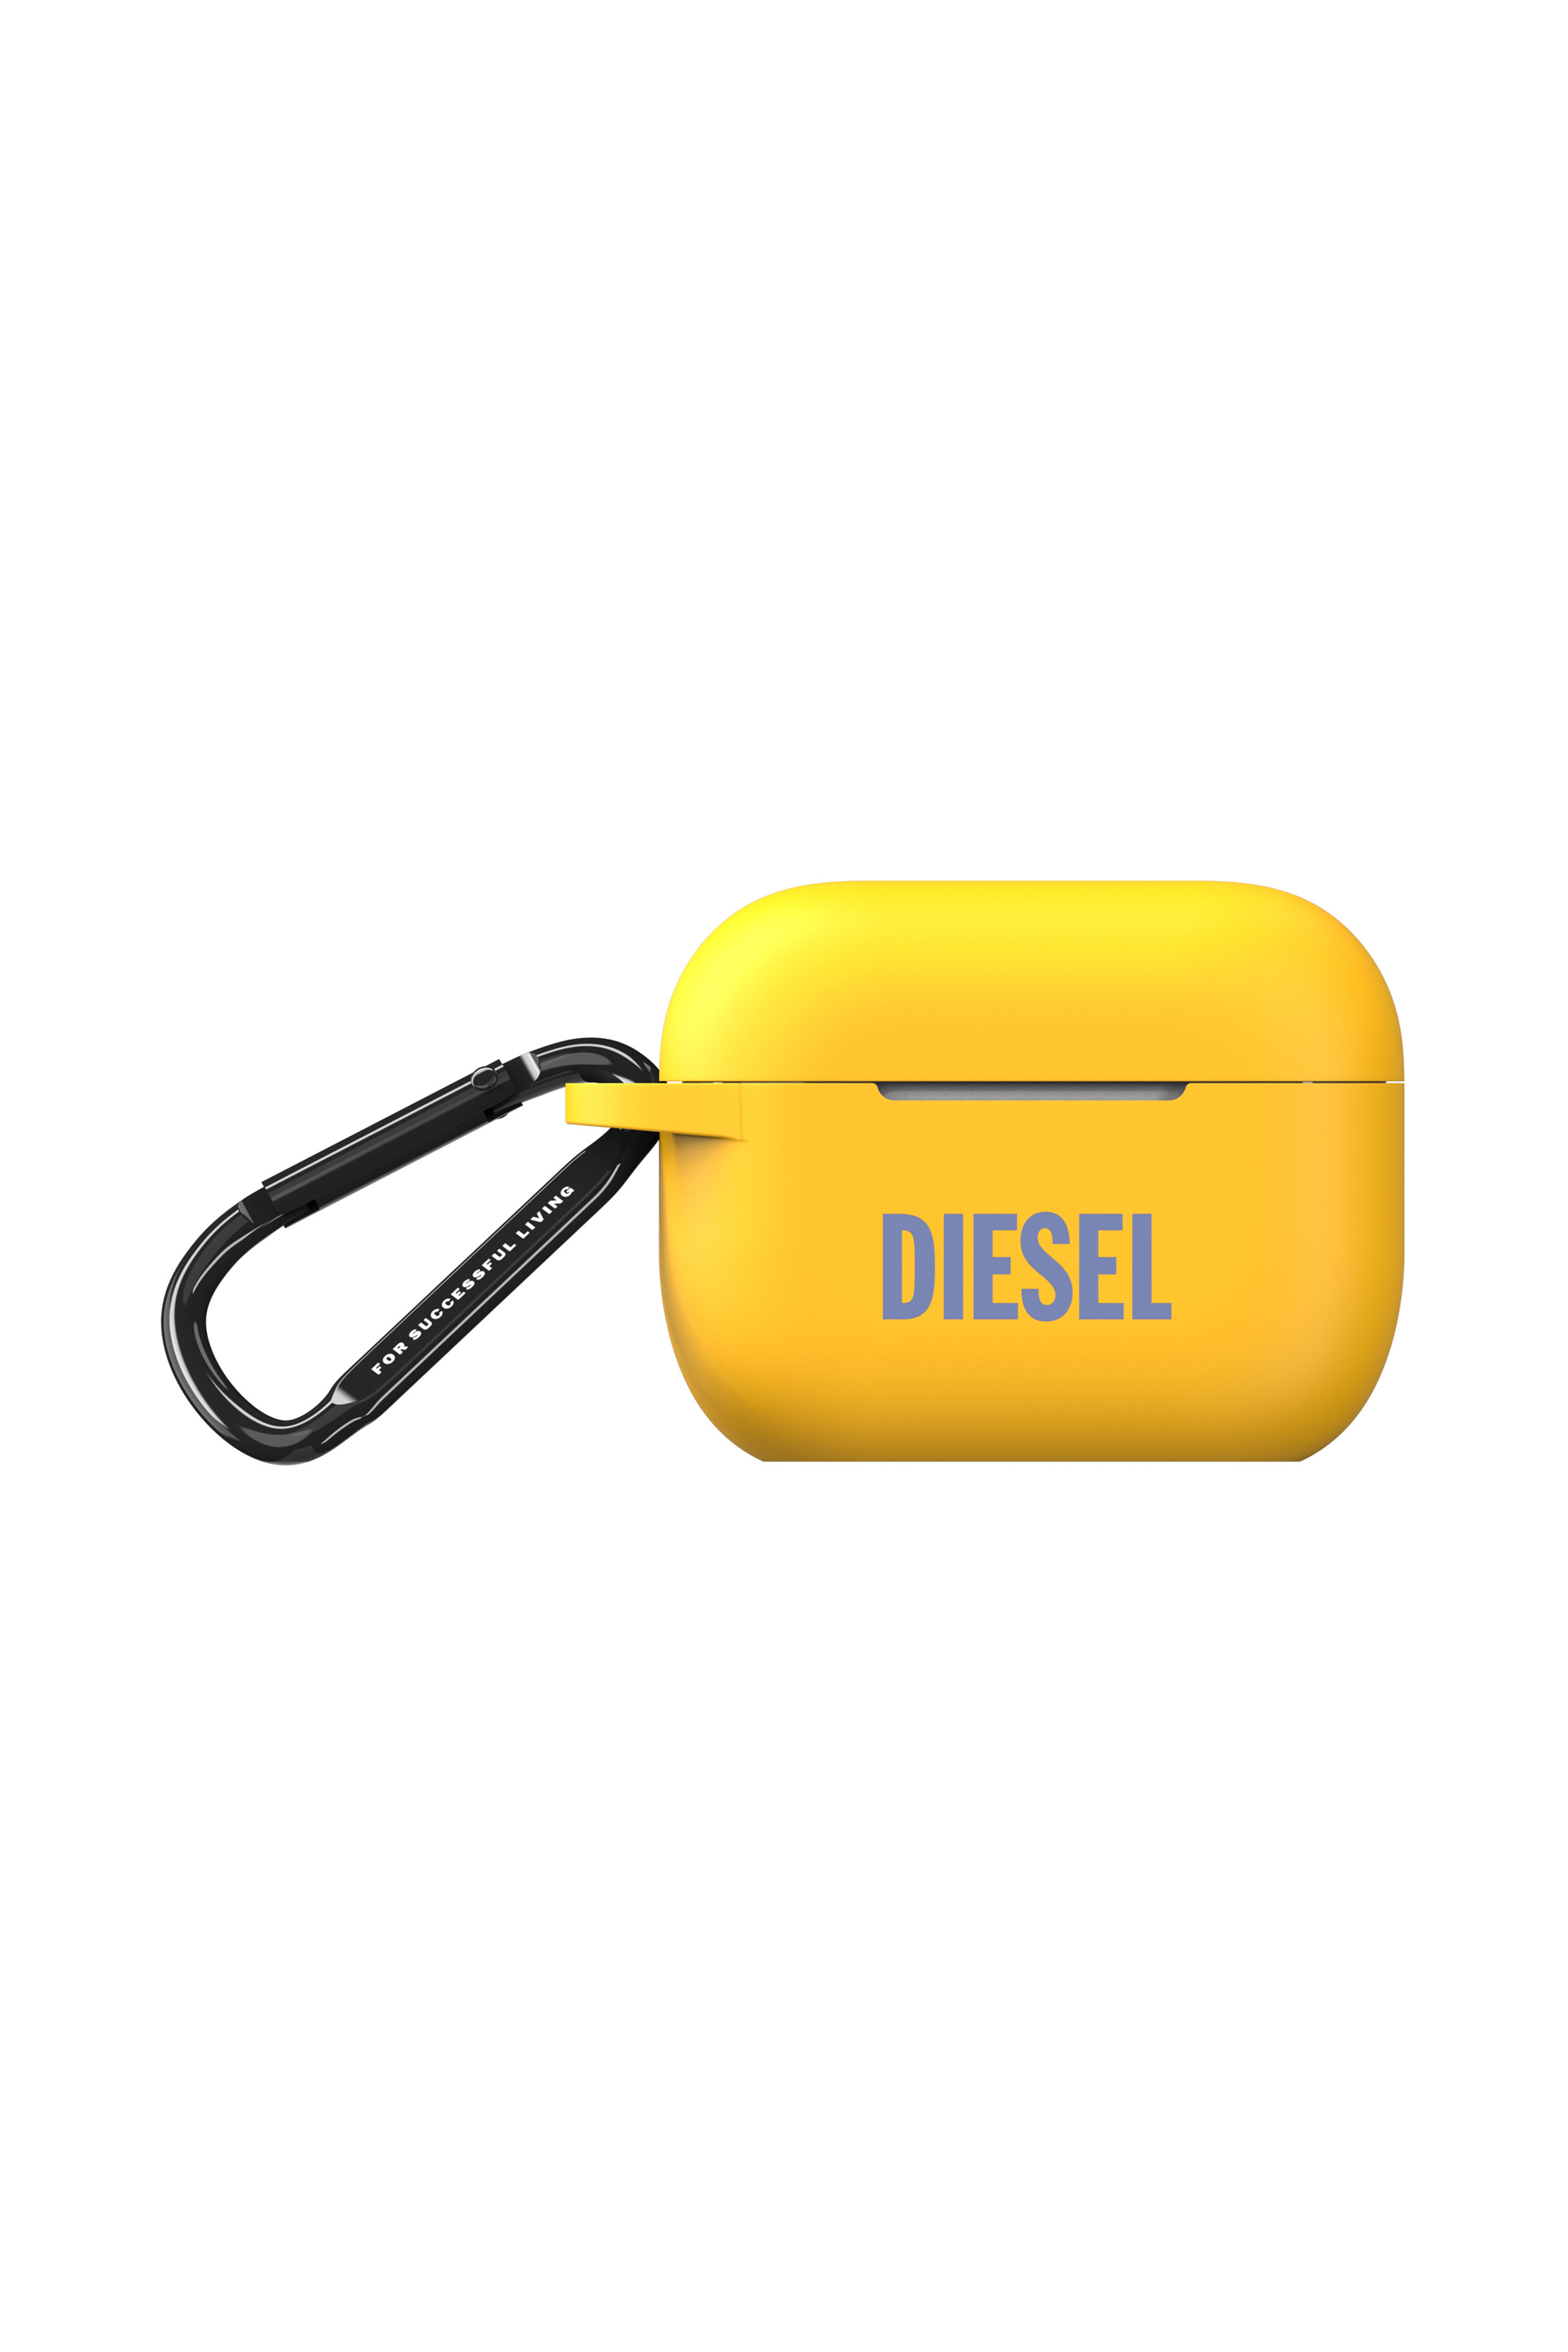 Diesel - 48322 AIRPOD CASE, Yellow - Image 1